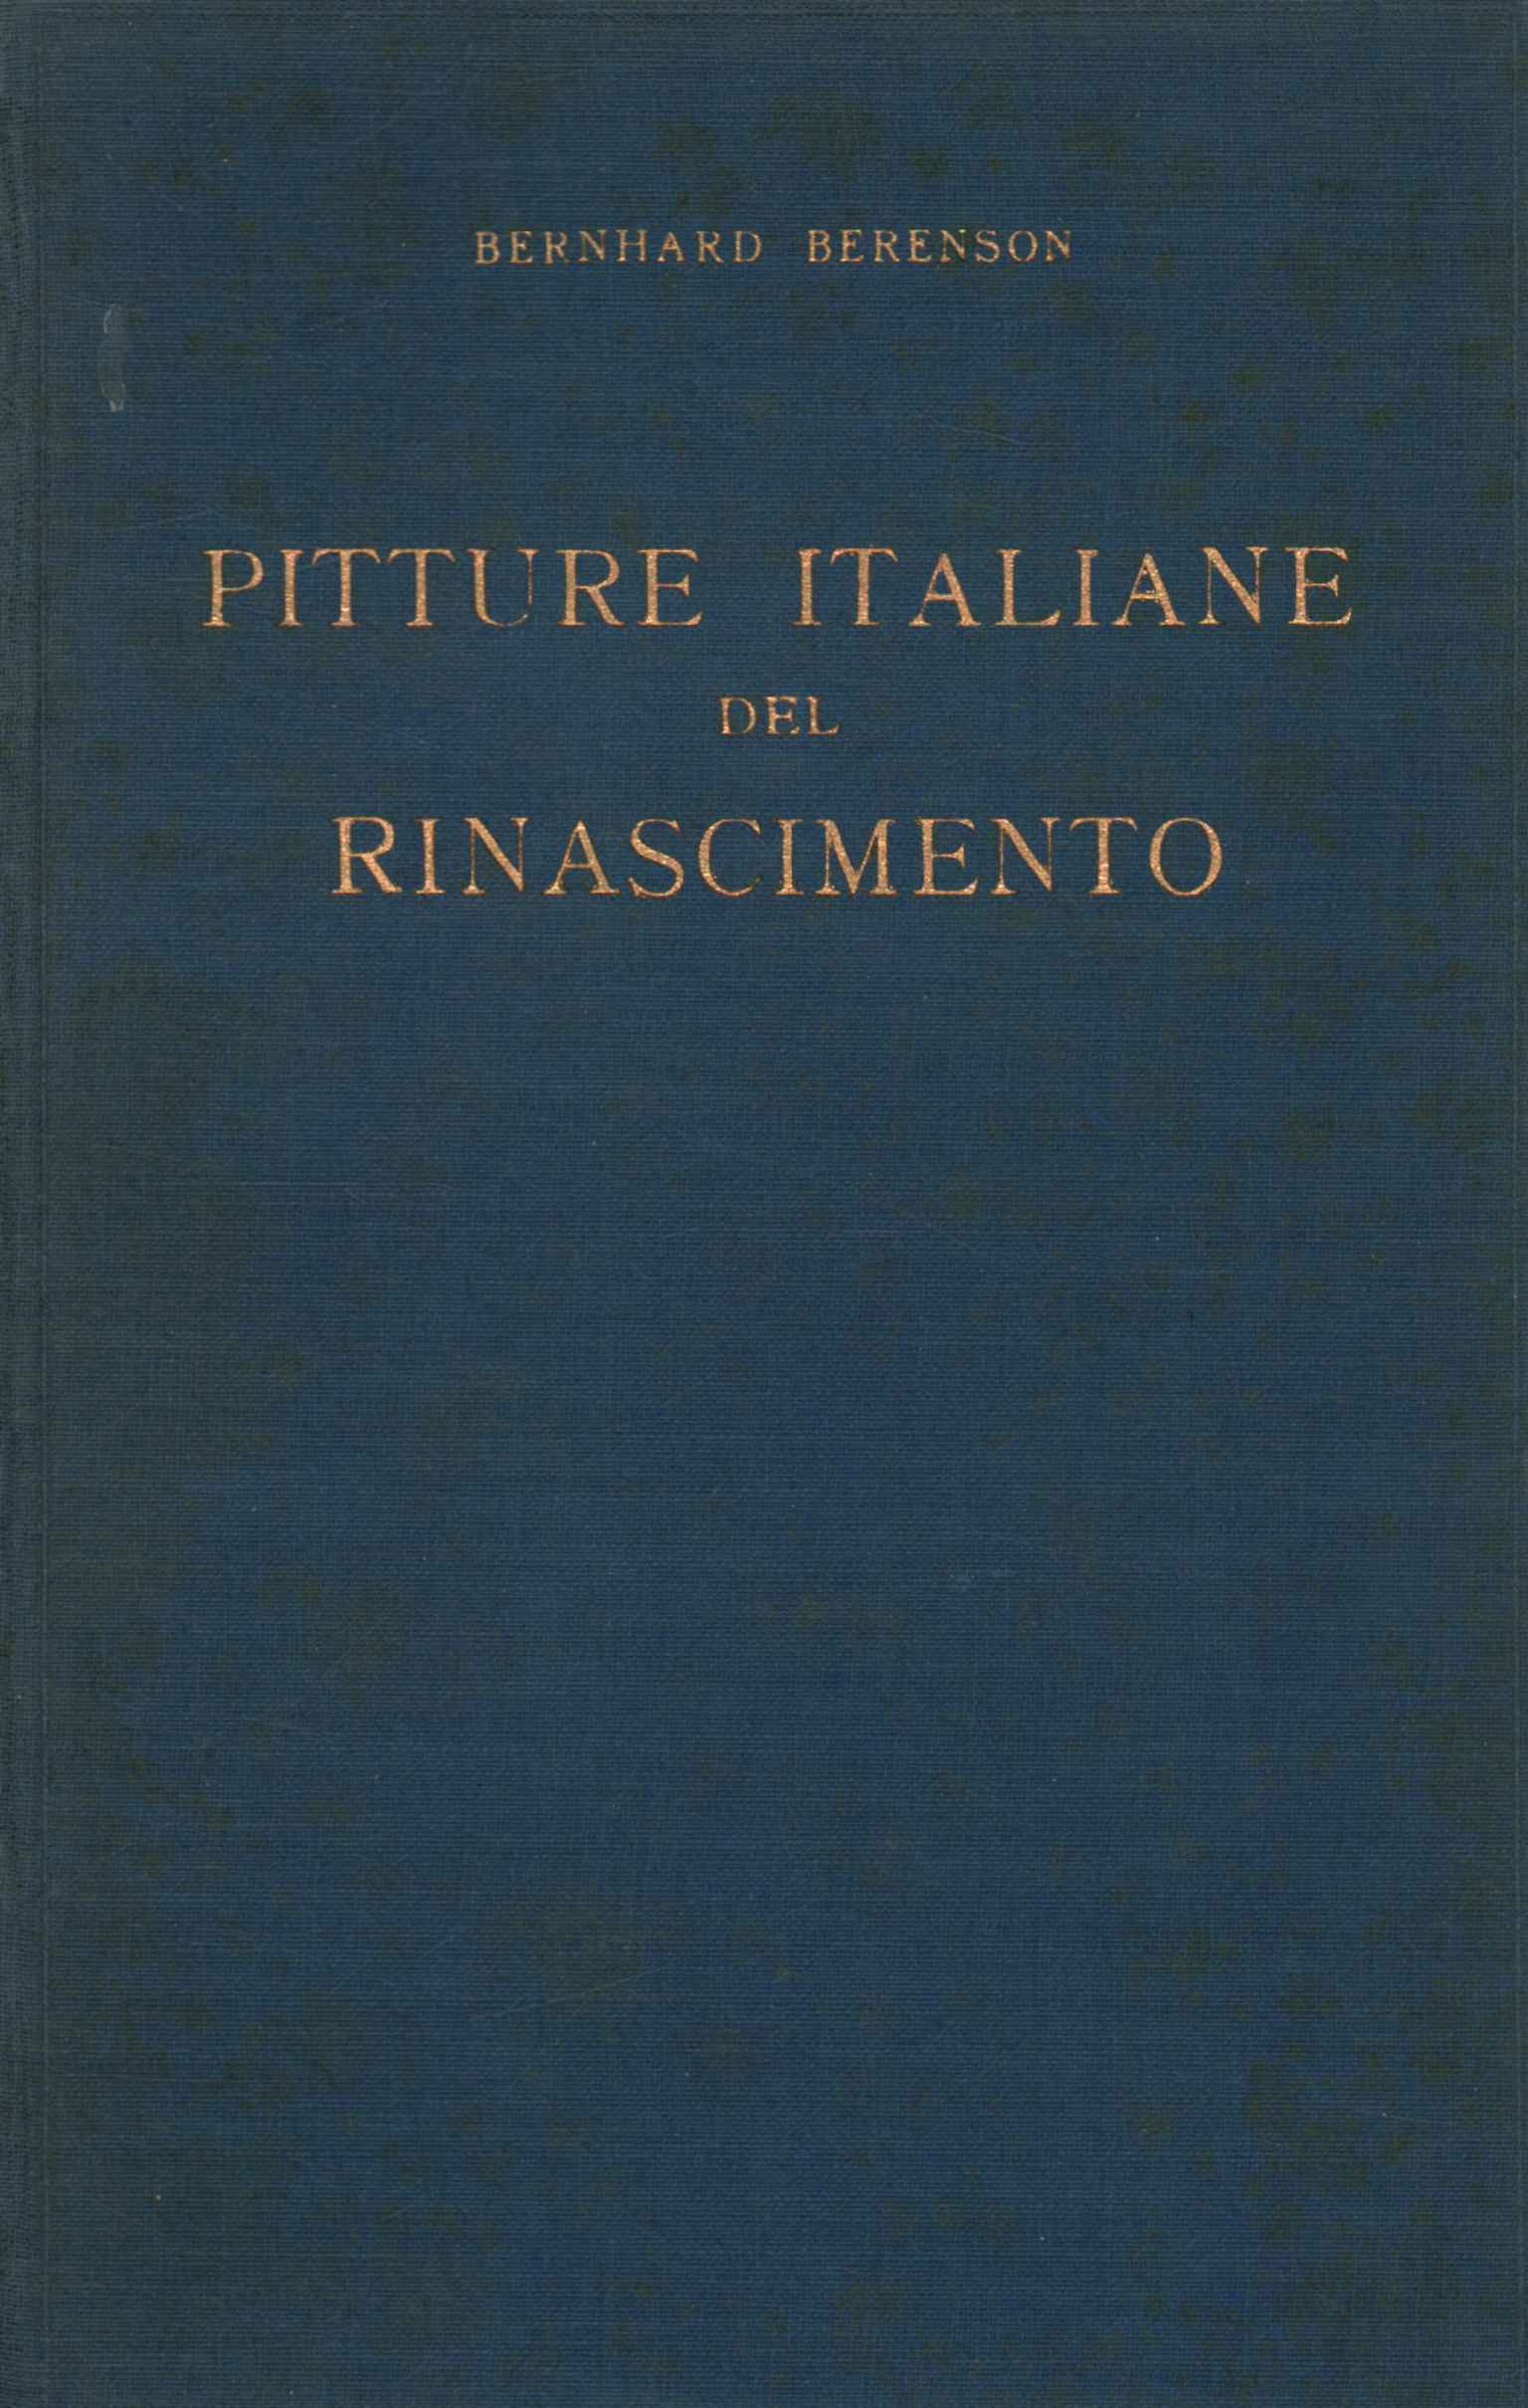 Italian Renaissance paintings